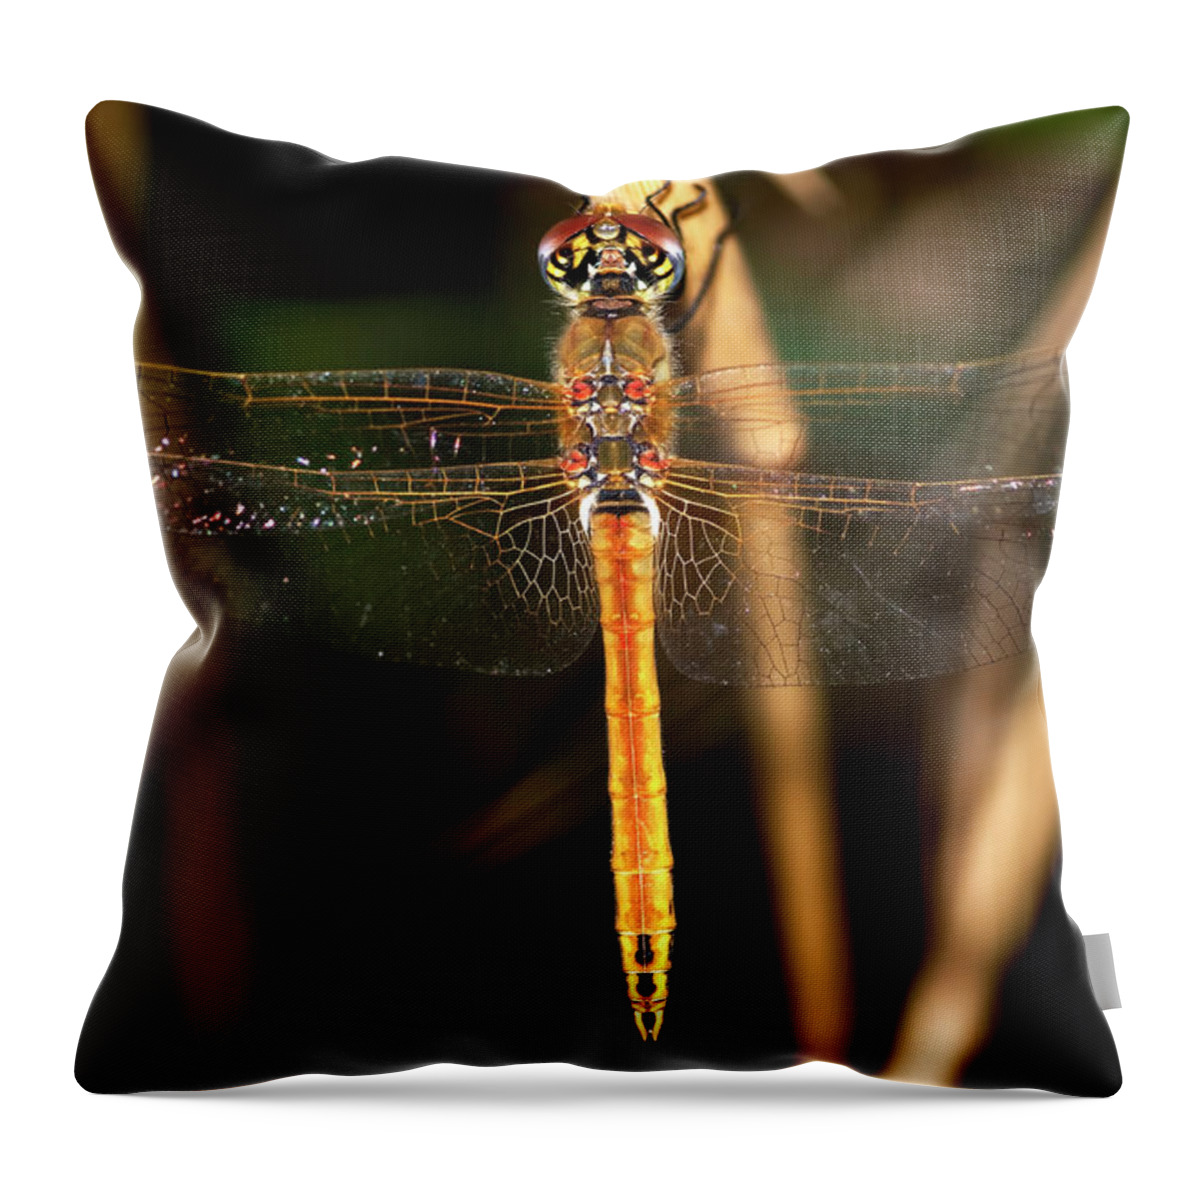 Dragonfly Throw Pillow featuring the photograph Dragon Fly 1 by Pedro Cardona Llambias